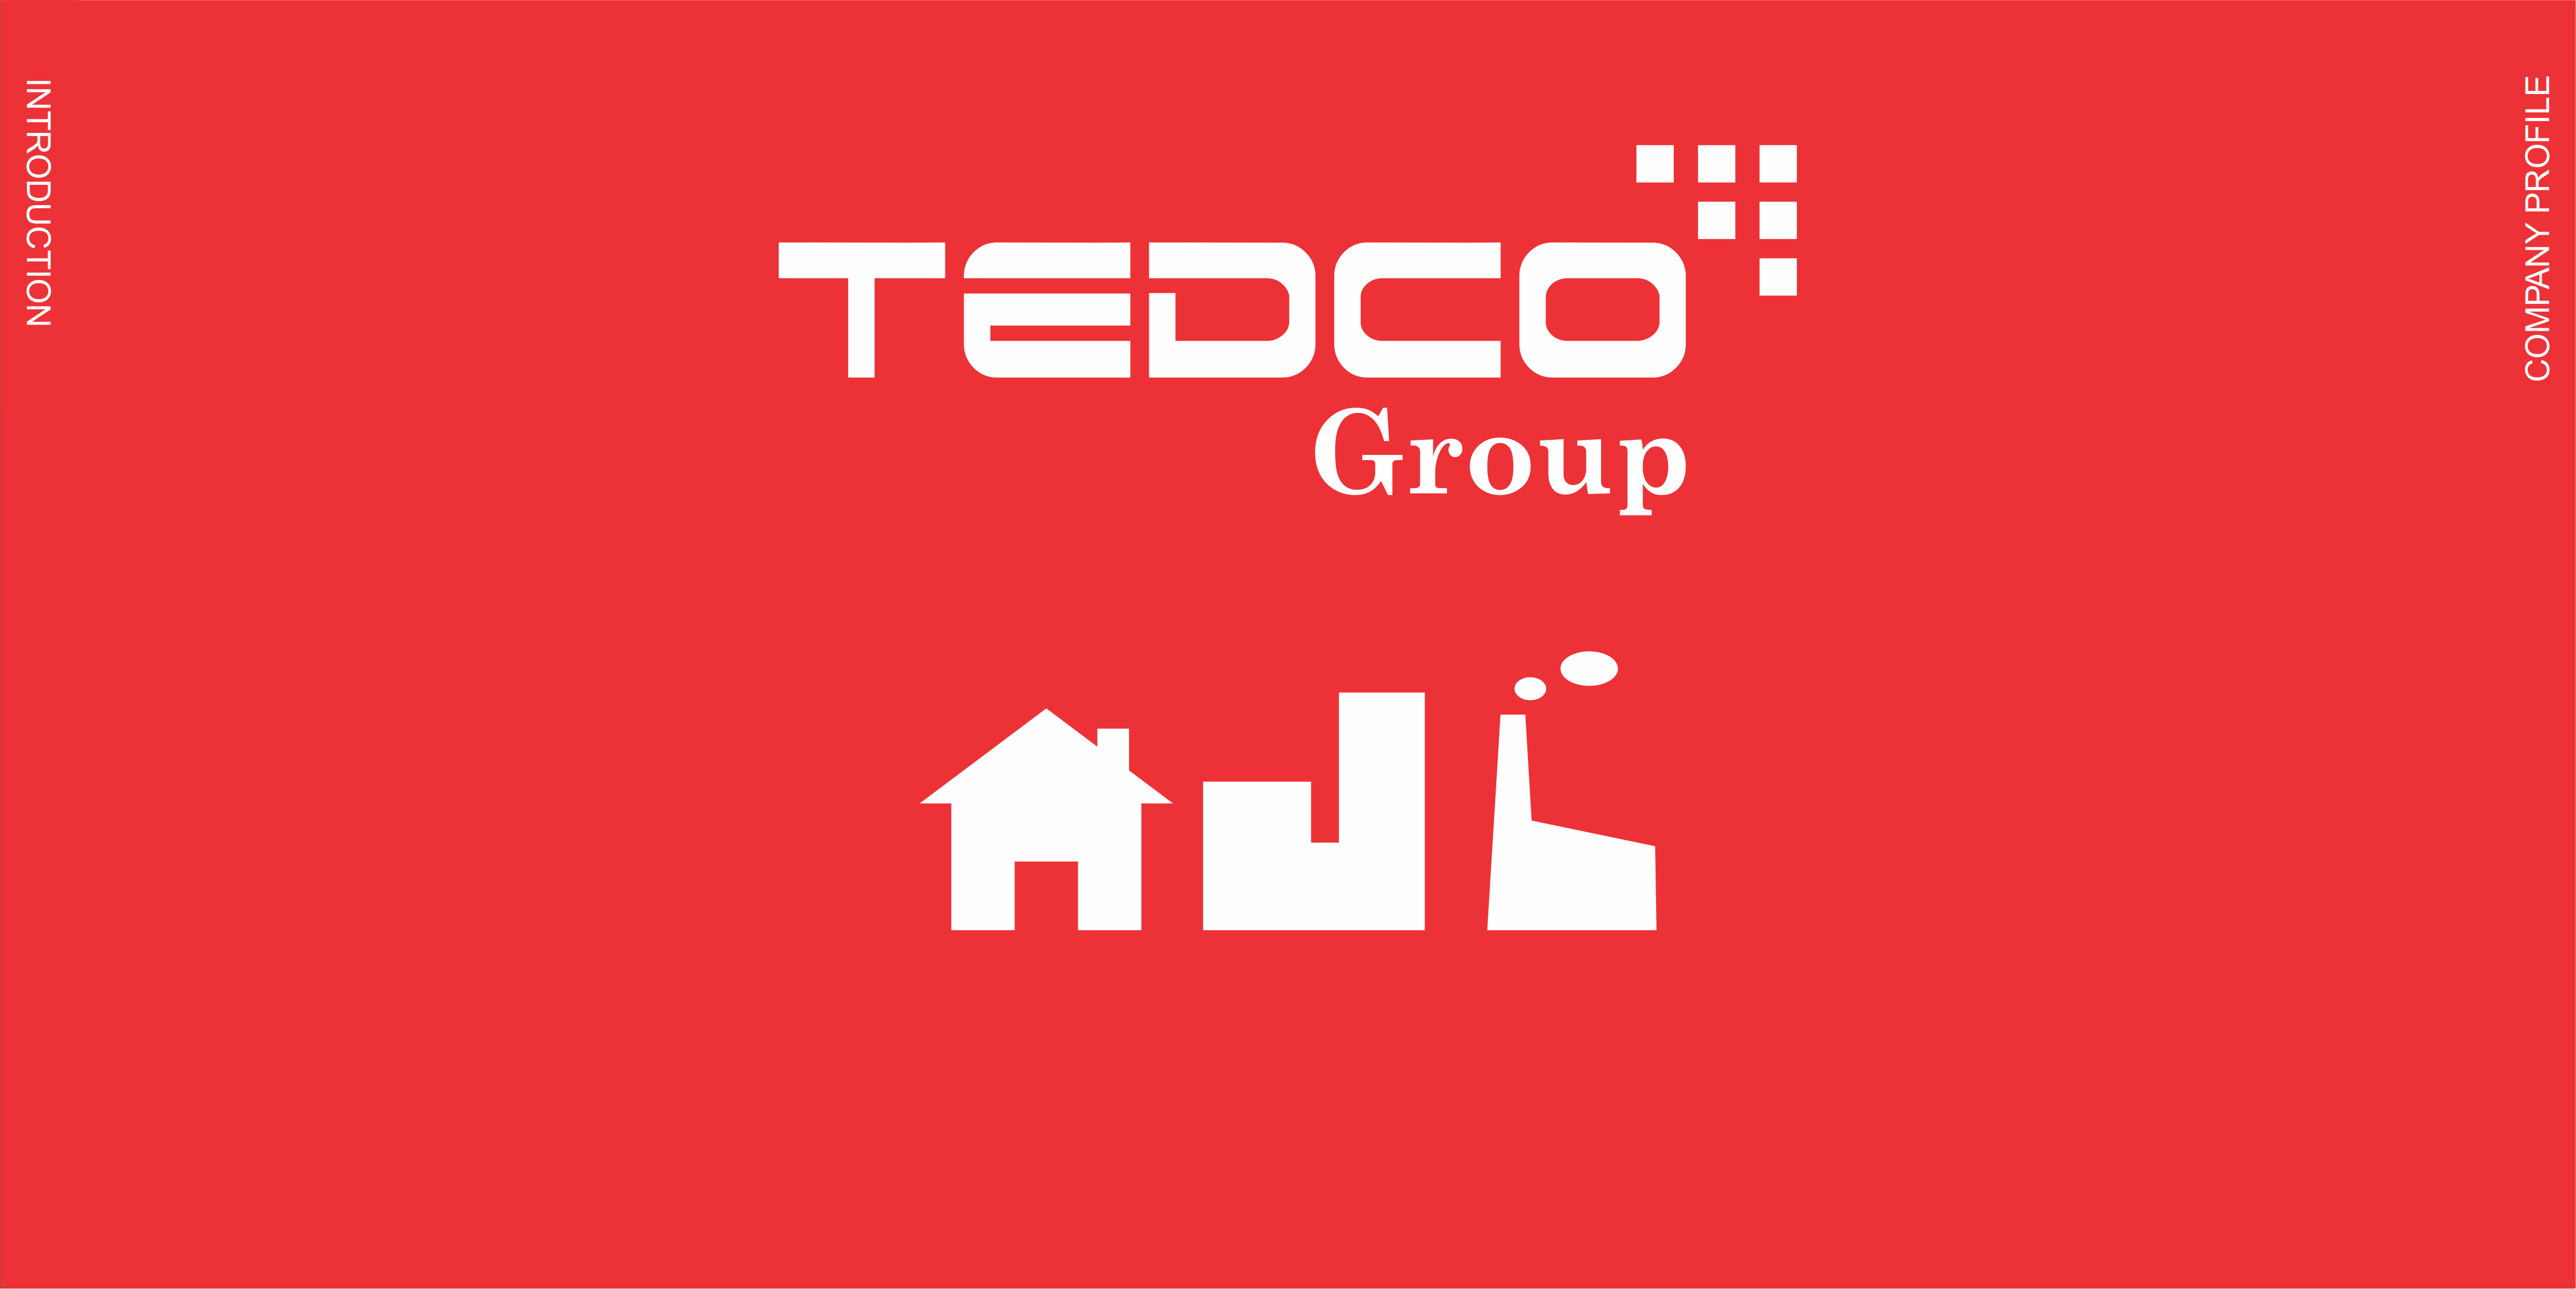 tedco-profile-1